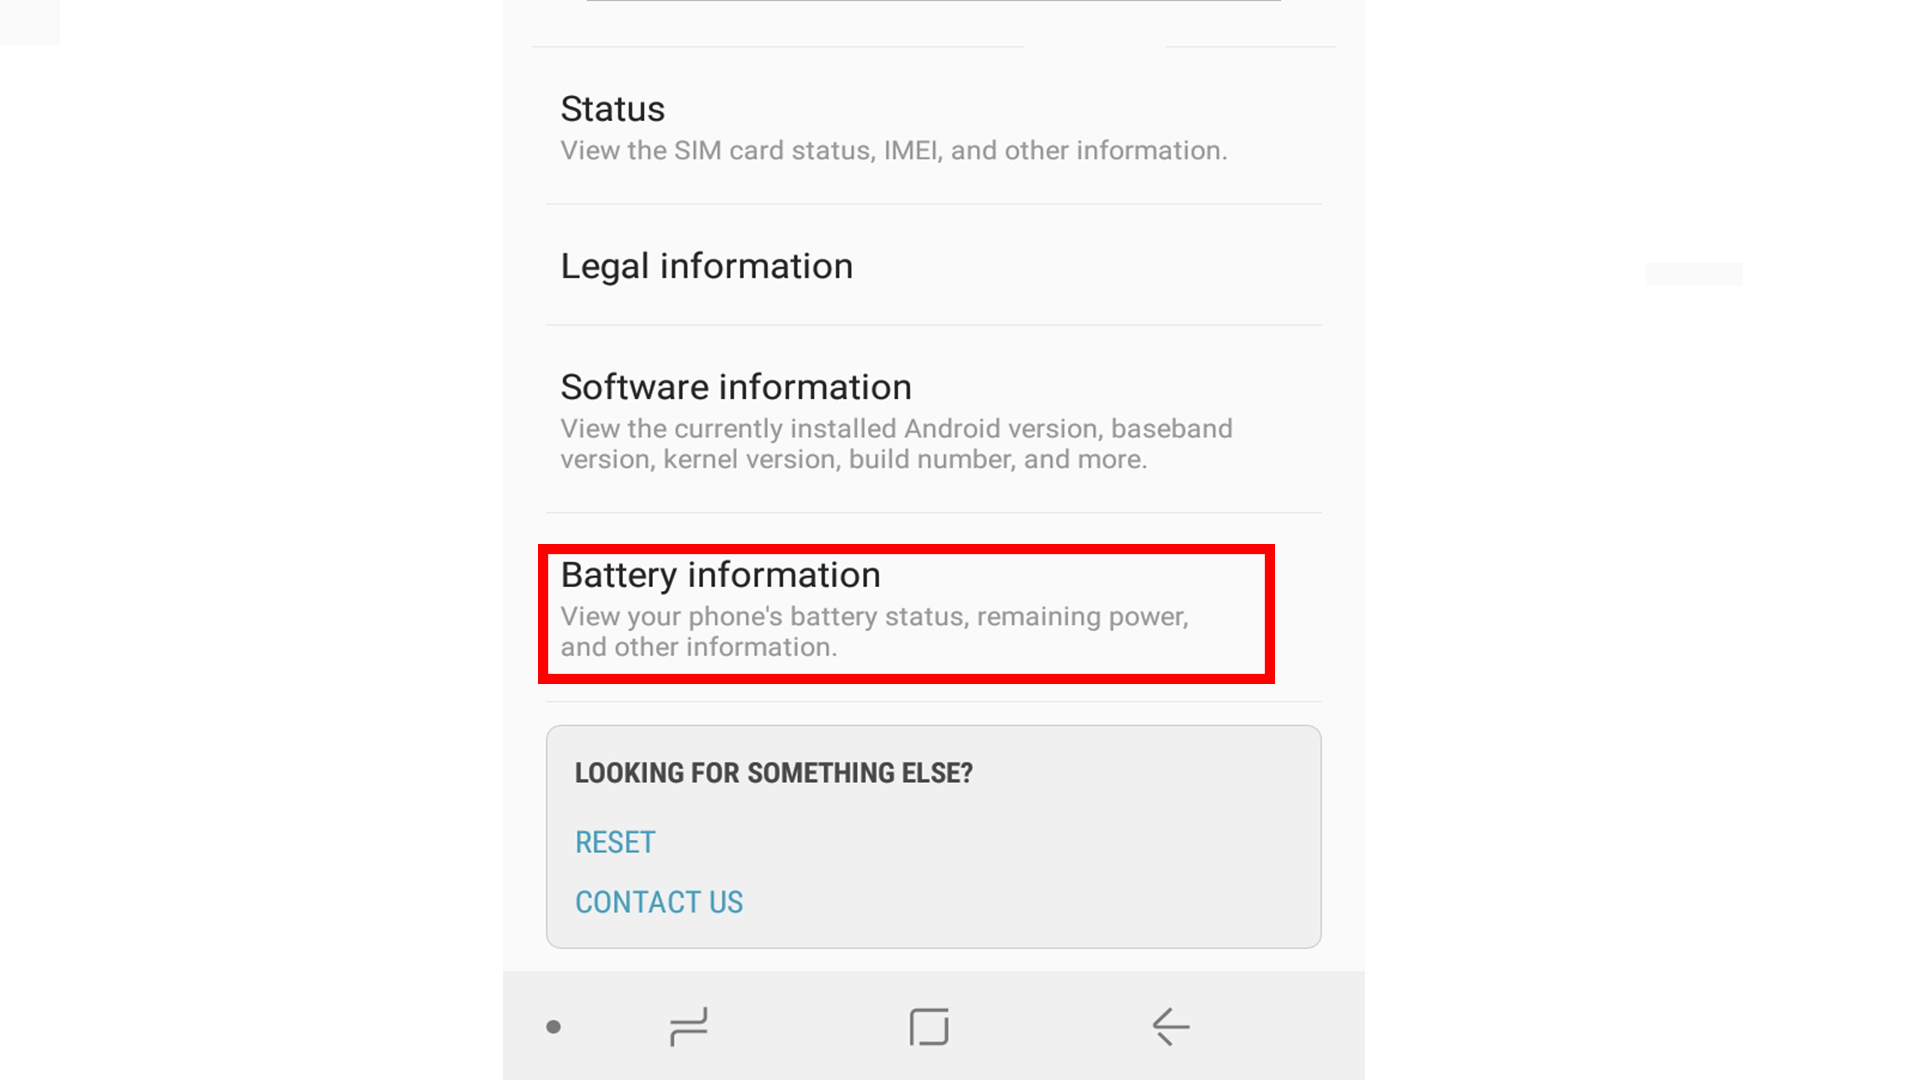 battery info